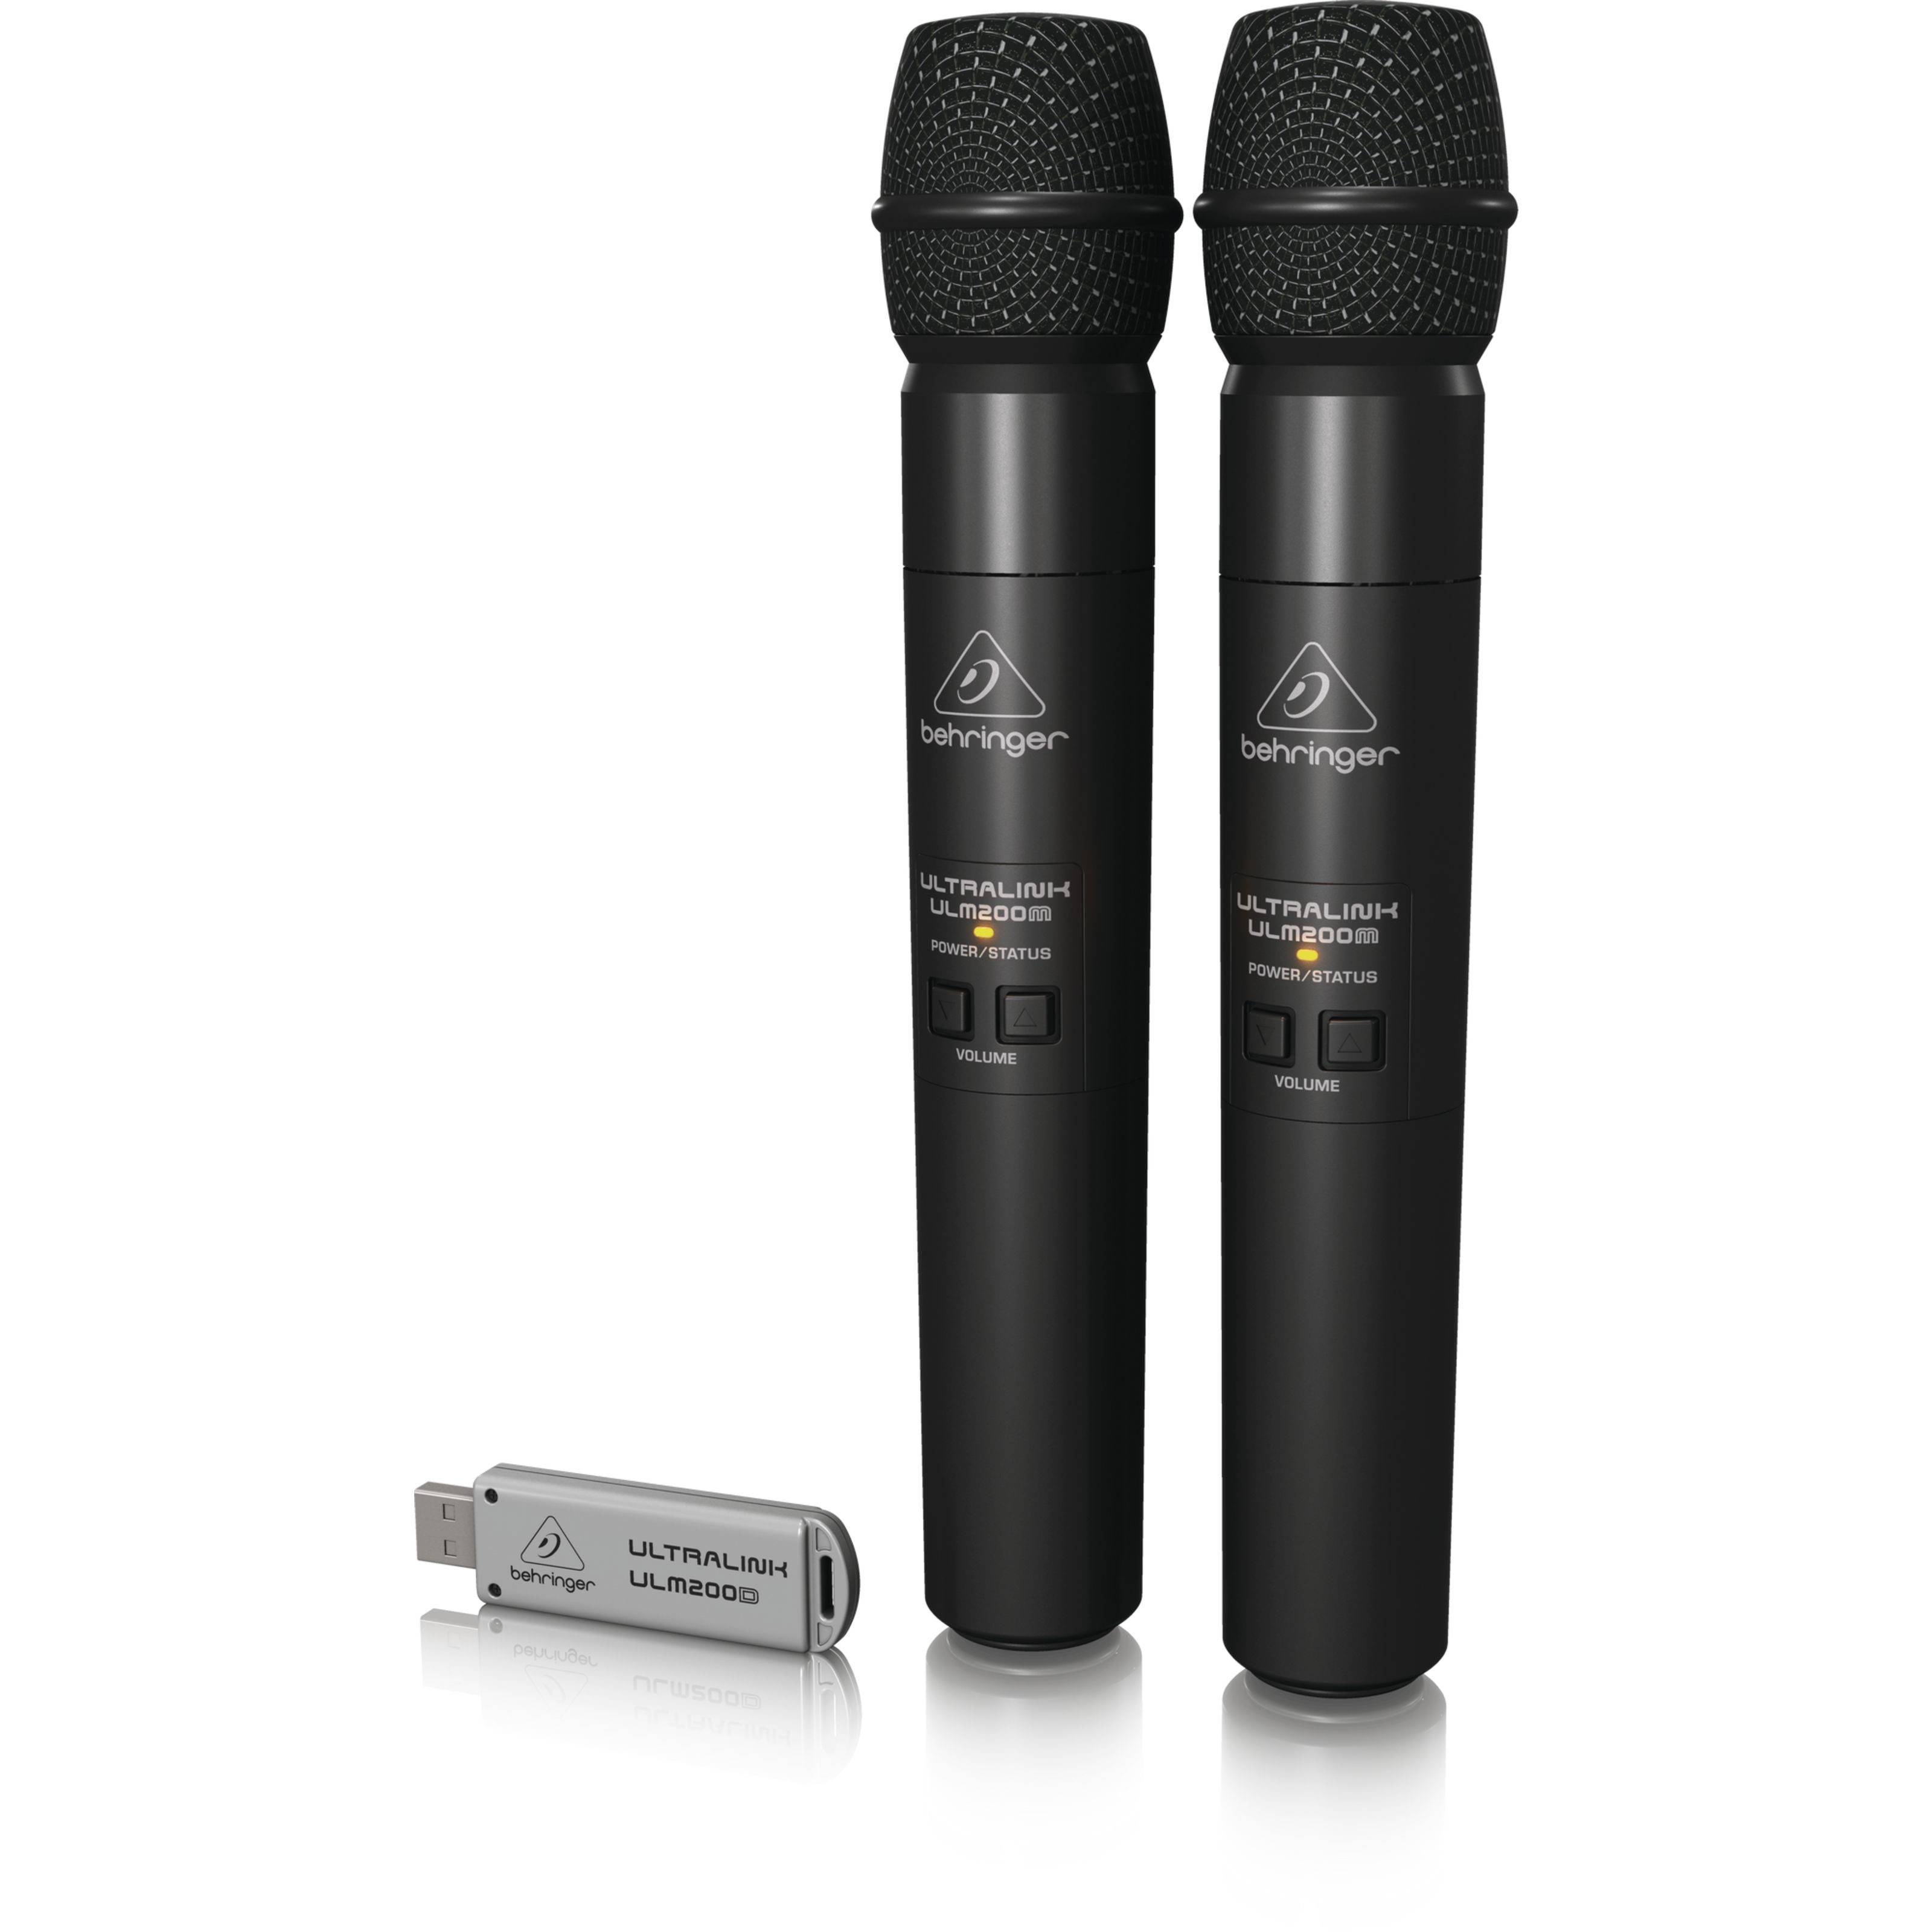 Behringer Mikrofon (ULM202USB Ultralink 2 x Handsender, USB Receiver), ULM202USB Ultralink 2 x Handsender, USB Receiver - Drahtlose